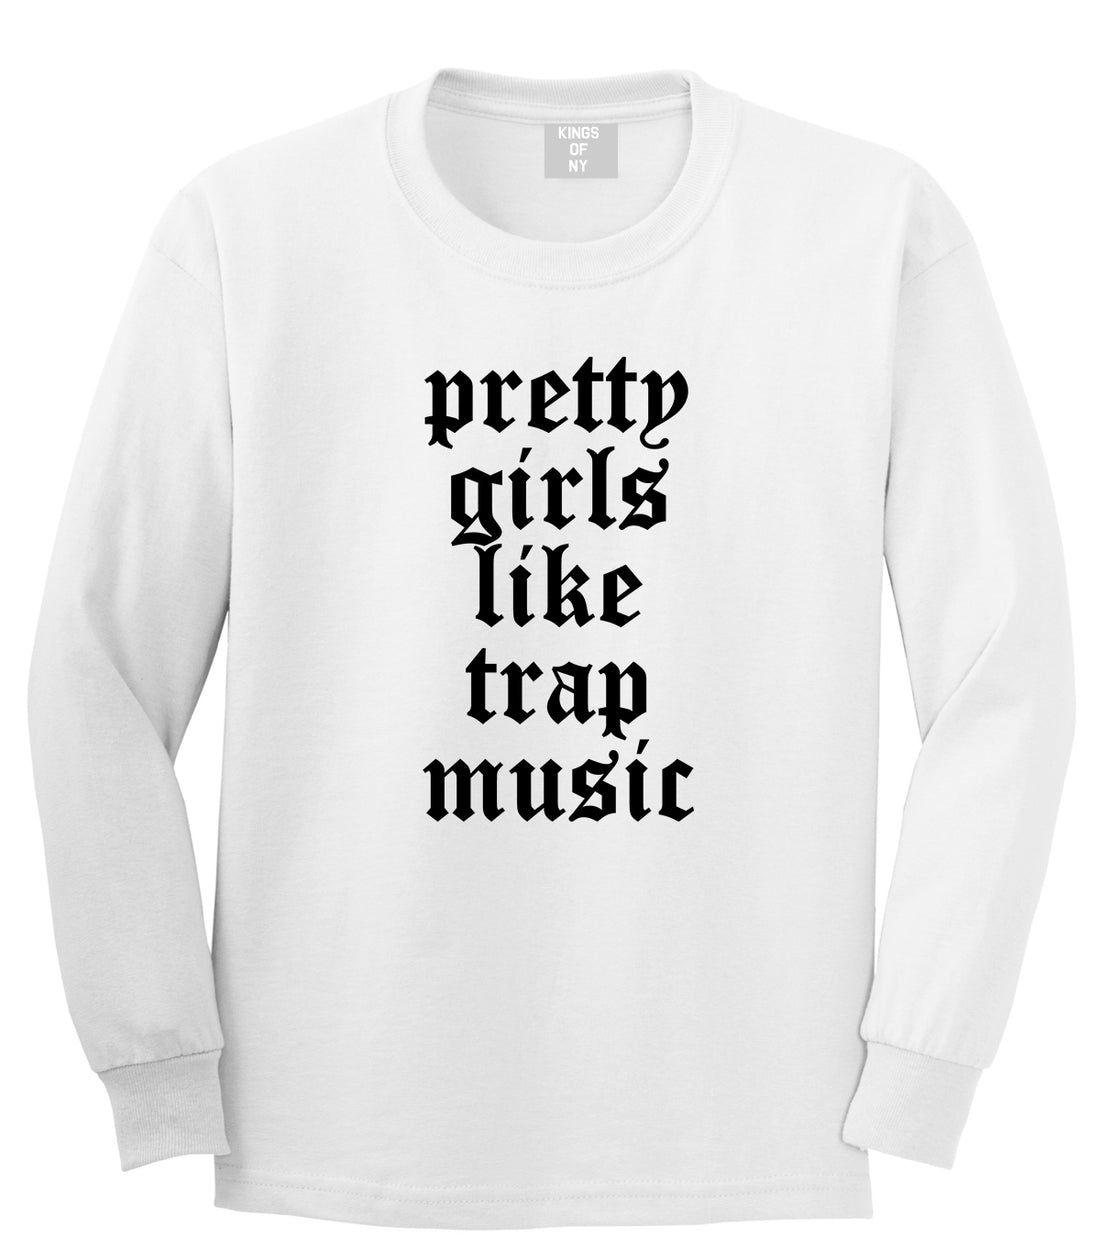 Pretty Girls Like Trap Music Mens Long Sleeve T-Shirt White by Kings Of NY